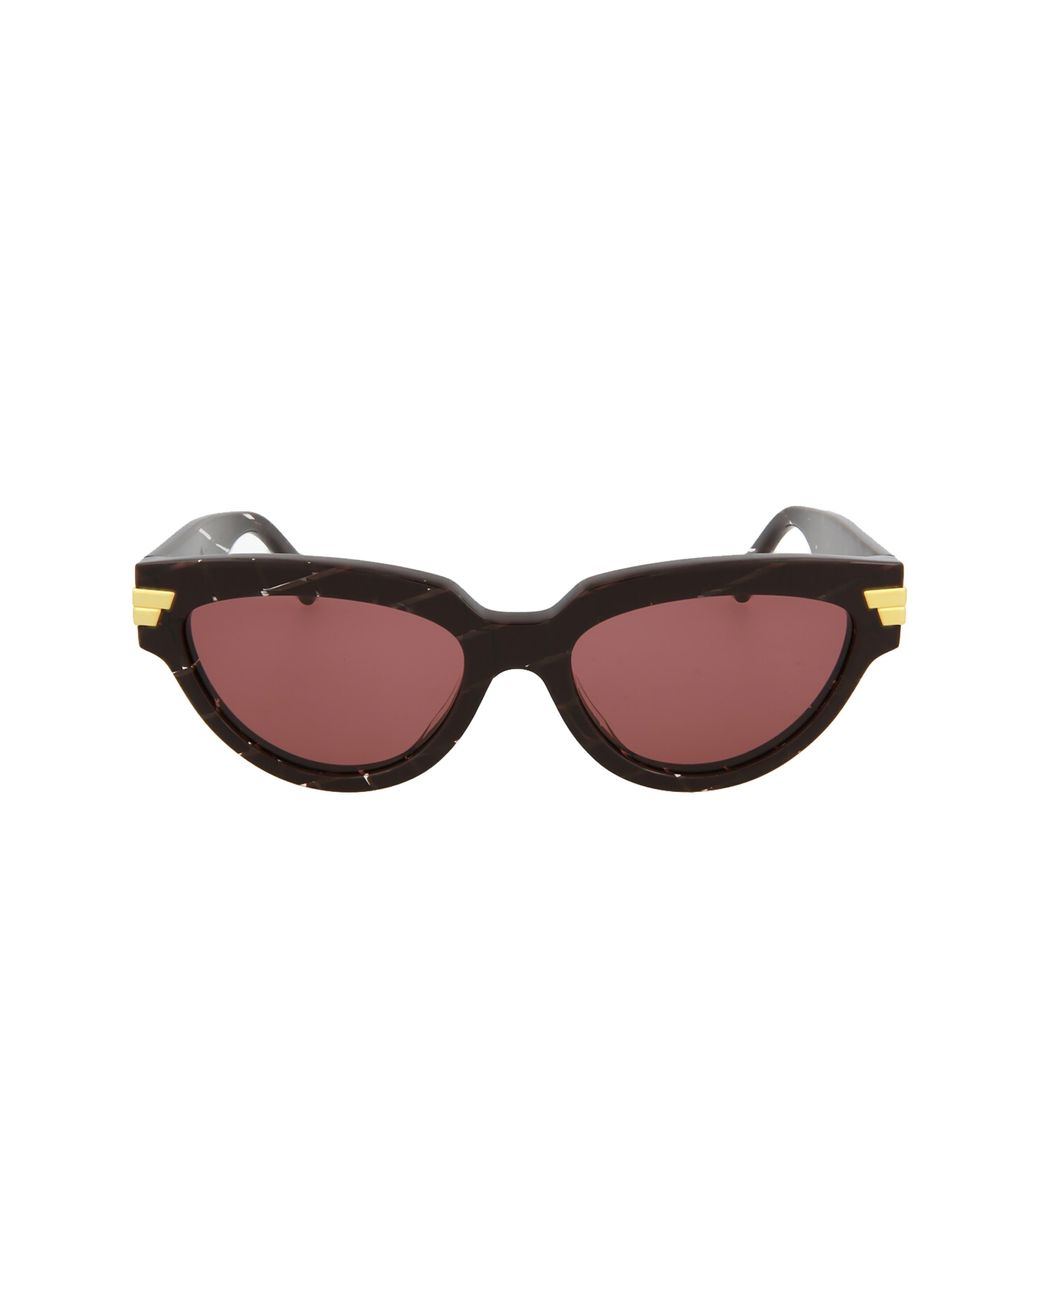 Bottega Veneta 55mm Cat Eye Sunglasses In Burgundy Pink At